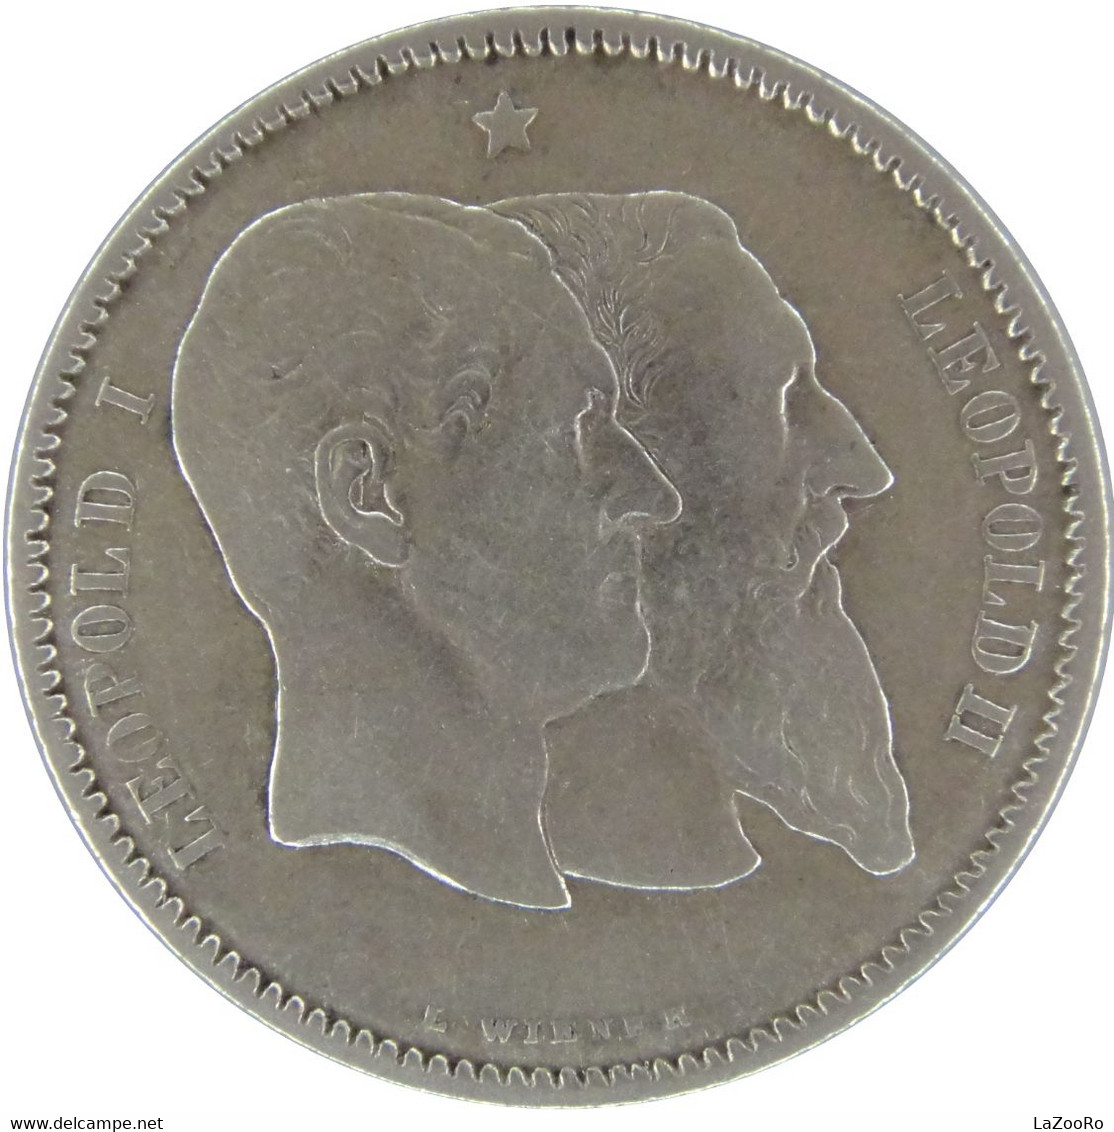 LaZooRo: Belgium 1 Franc 1880 XF - Silver - 1 Franc